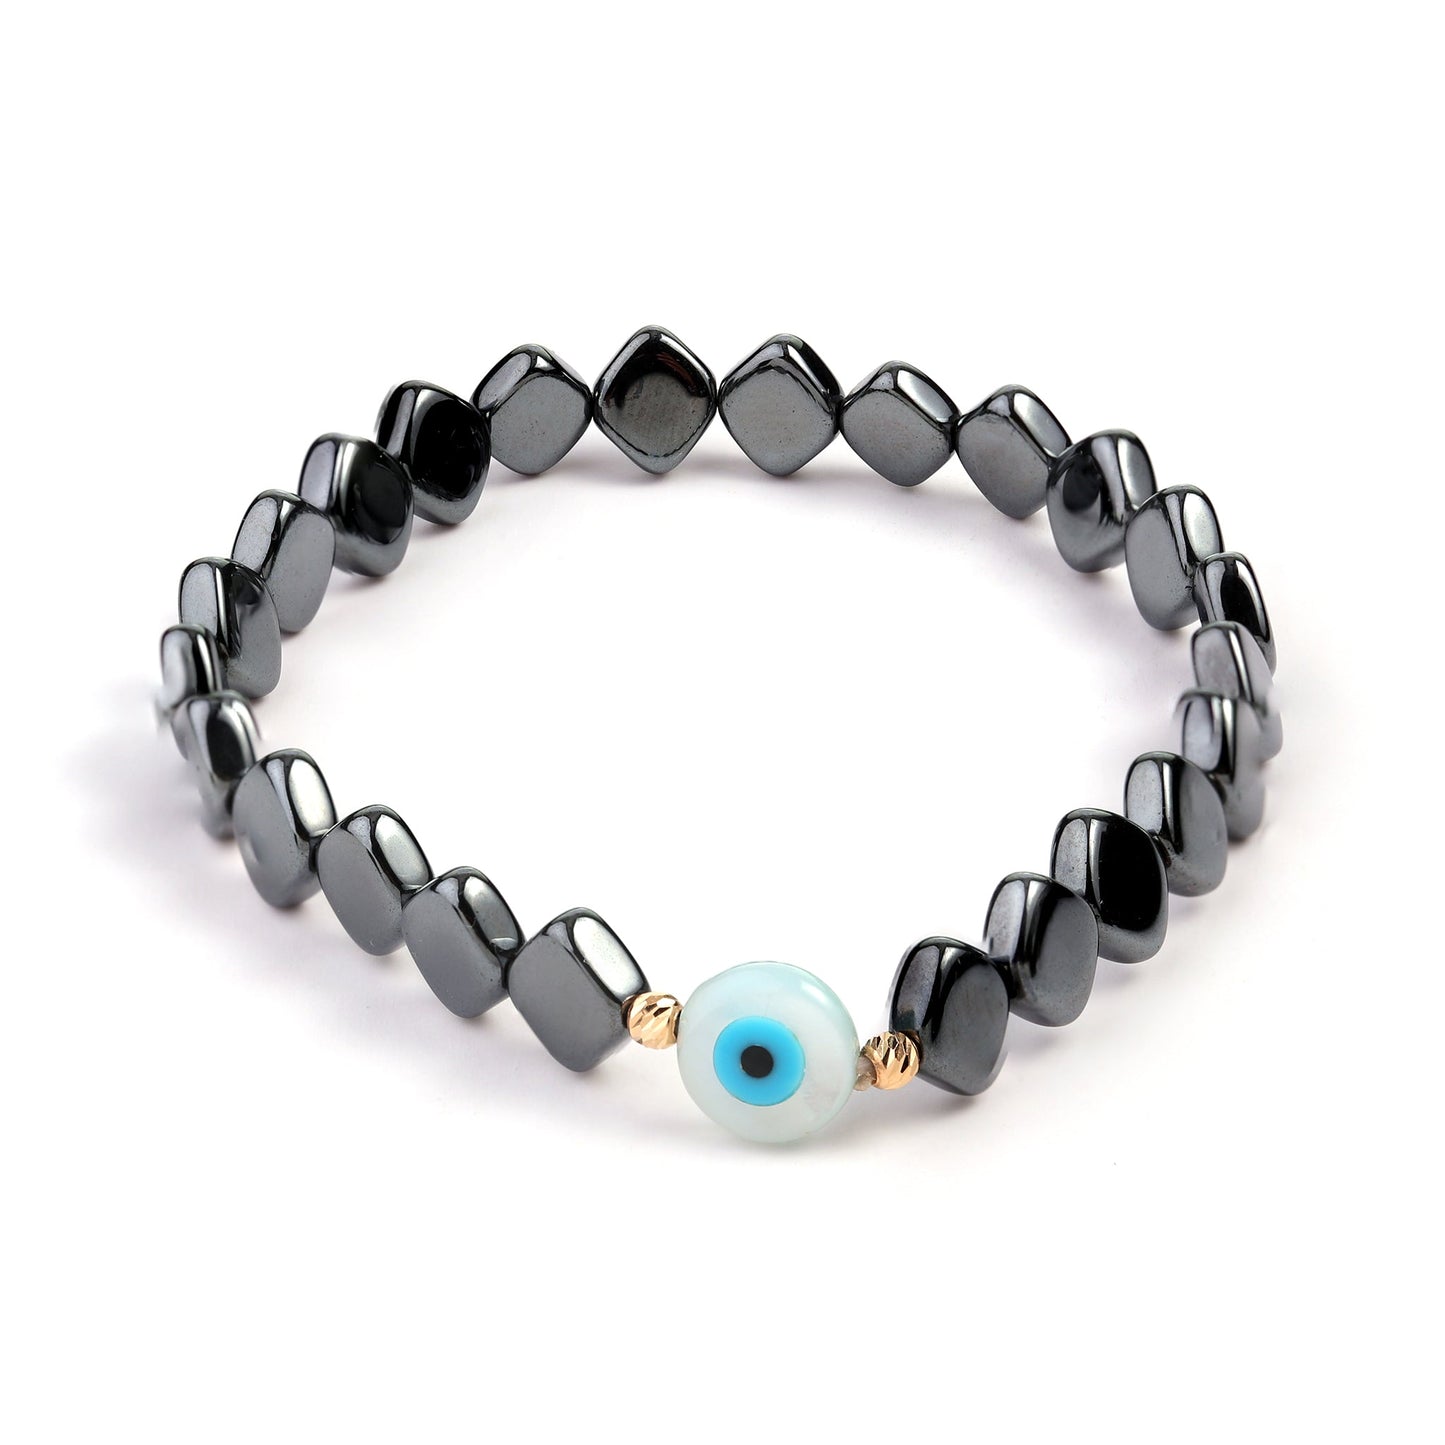 The eye of protection beaded bracelet diamond shape - Oria.jewelry